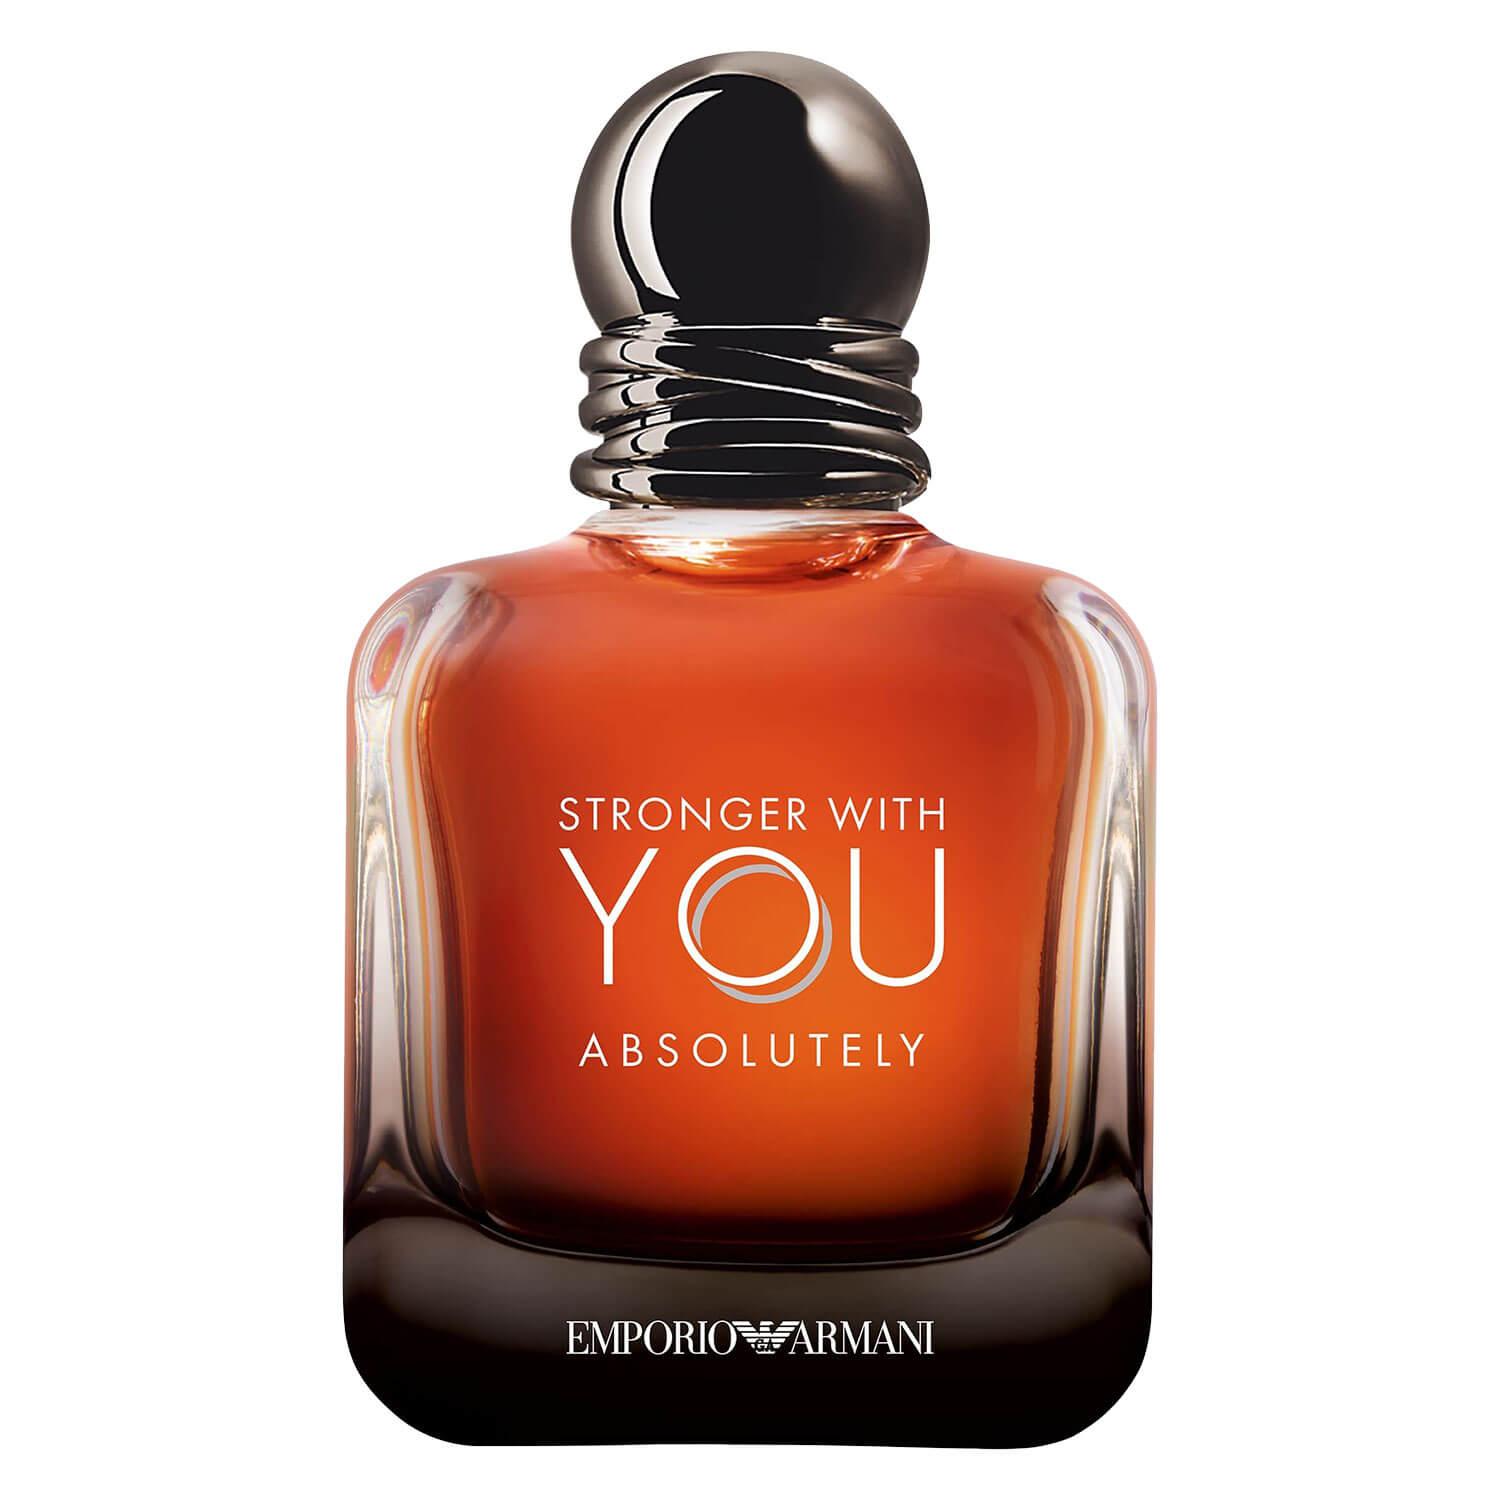 Emporio Armani - Stronger With You Absolutely Eau de Parfum